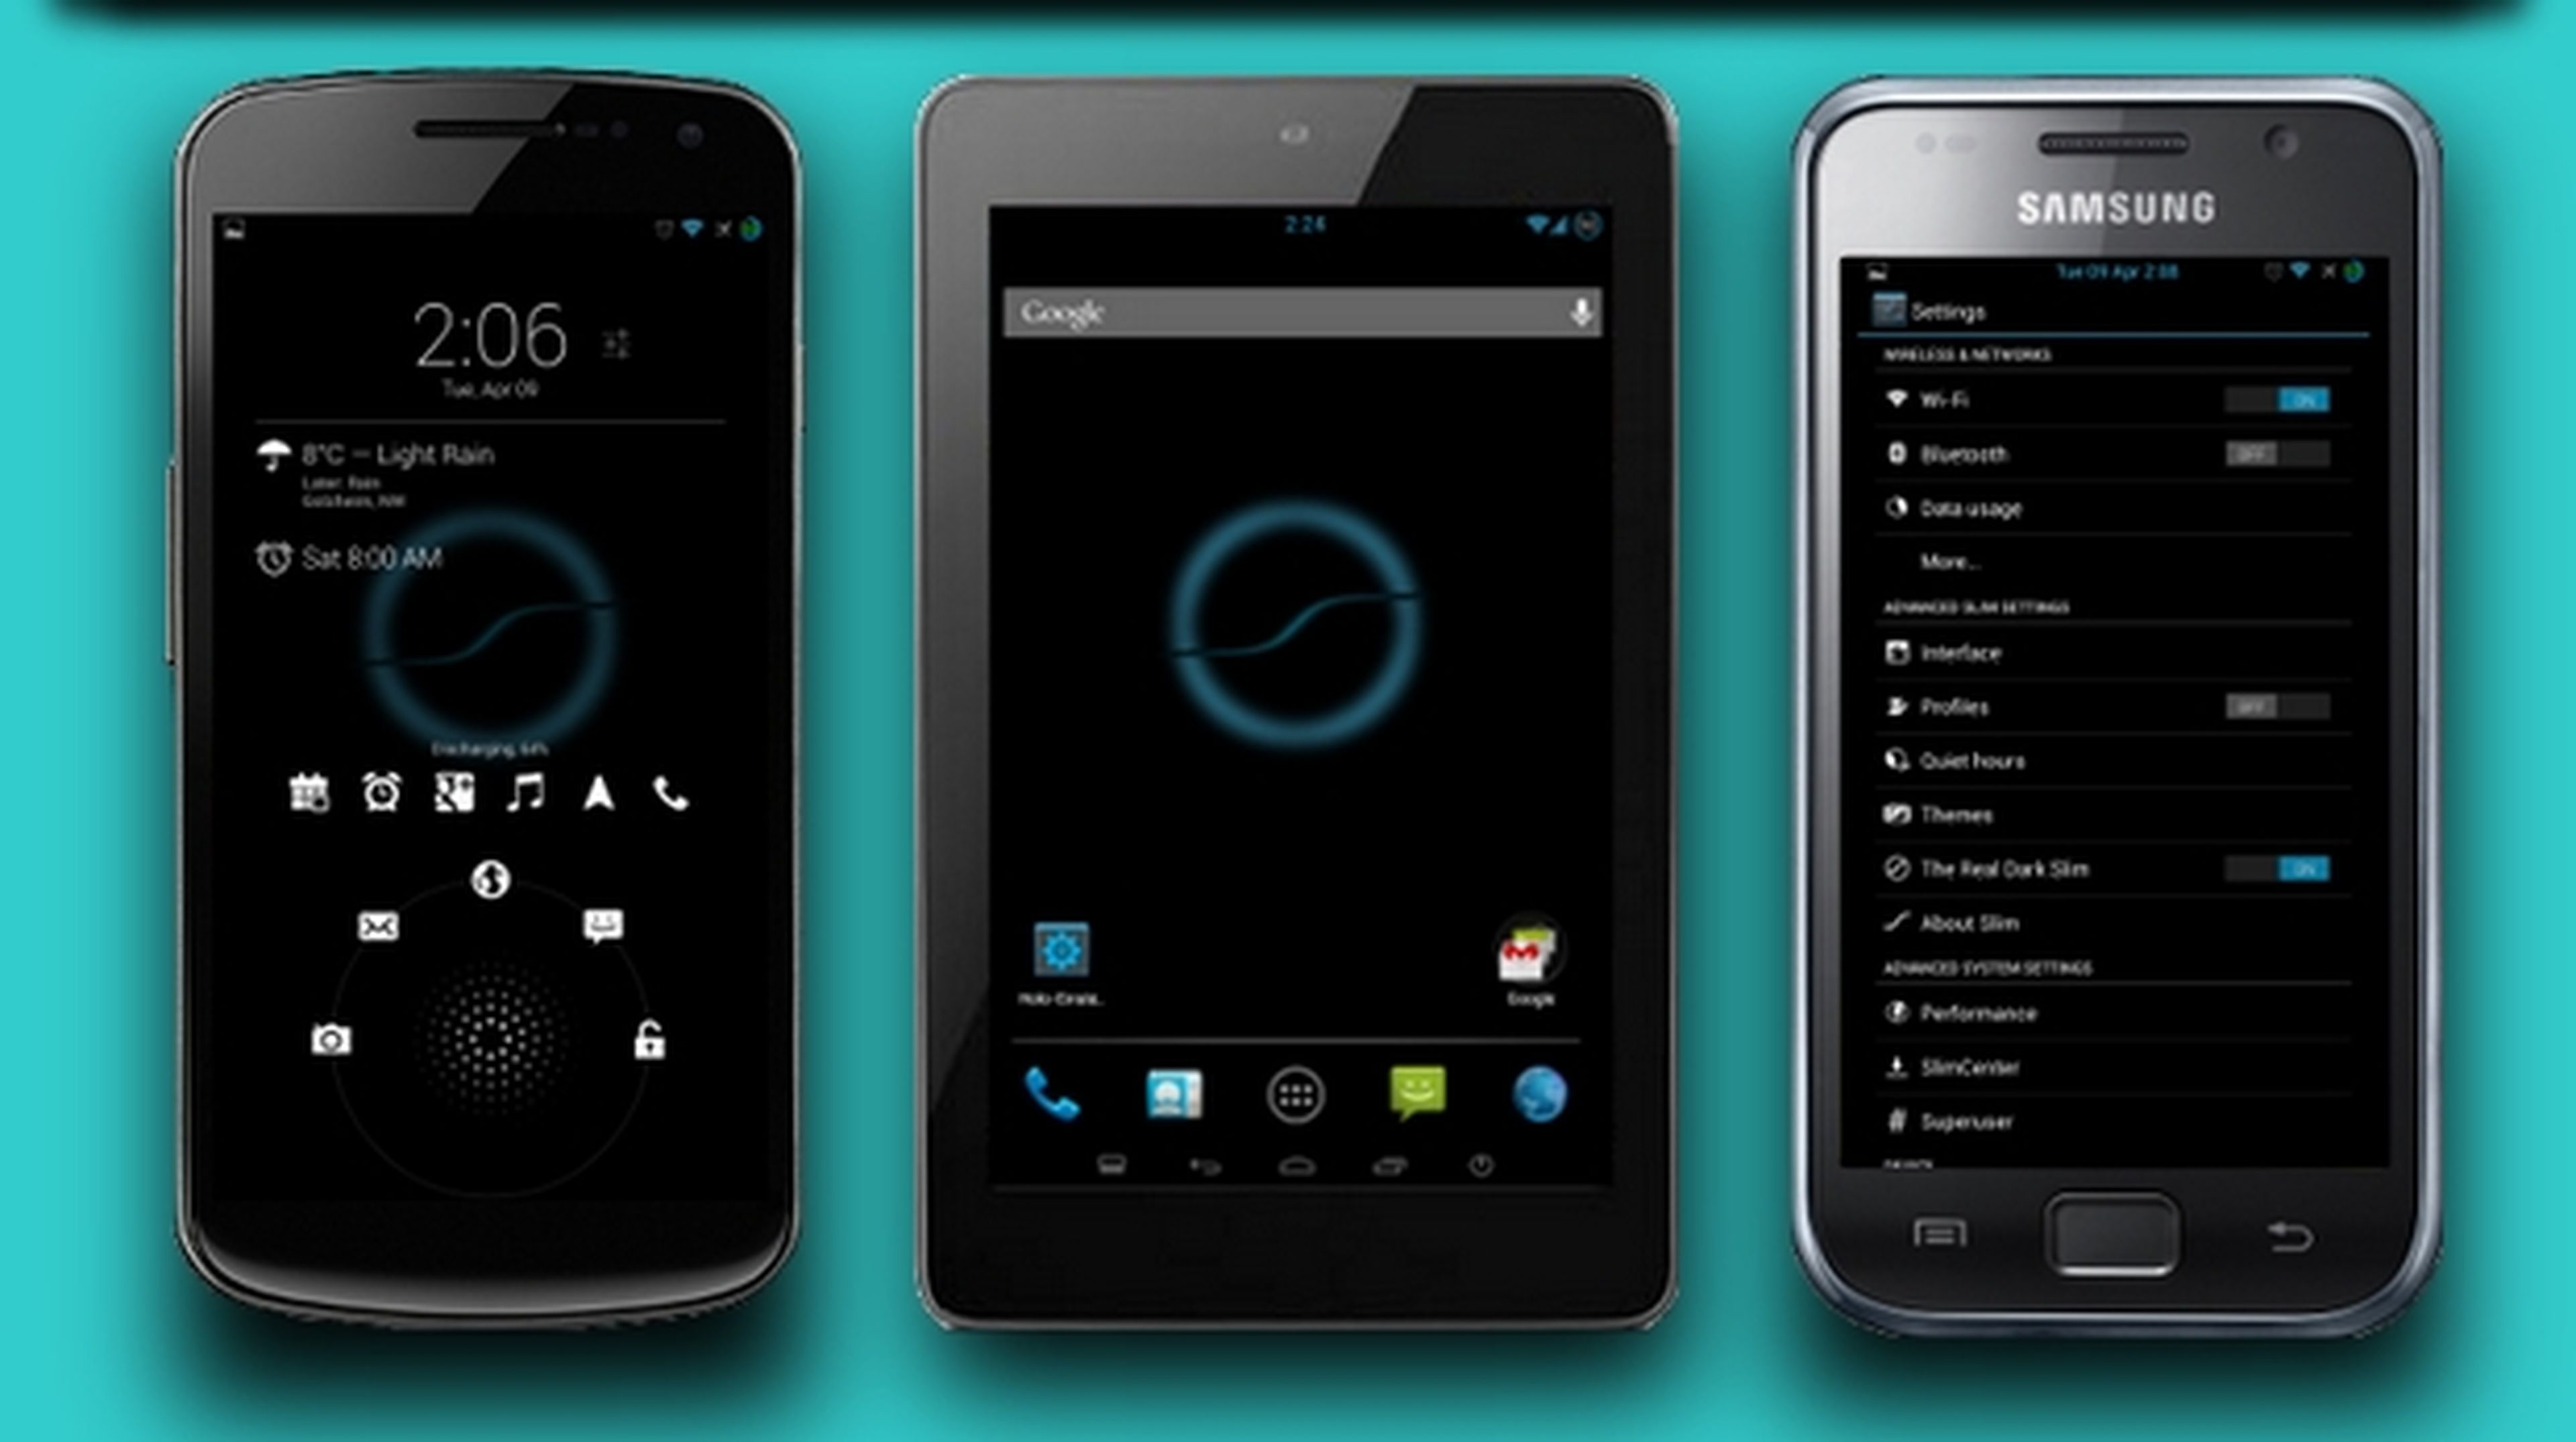 Usuarios lanzan versión no oficial de Android 4.4 KitKat para Galaxy Nexus